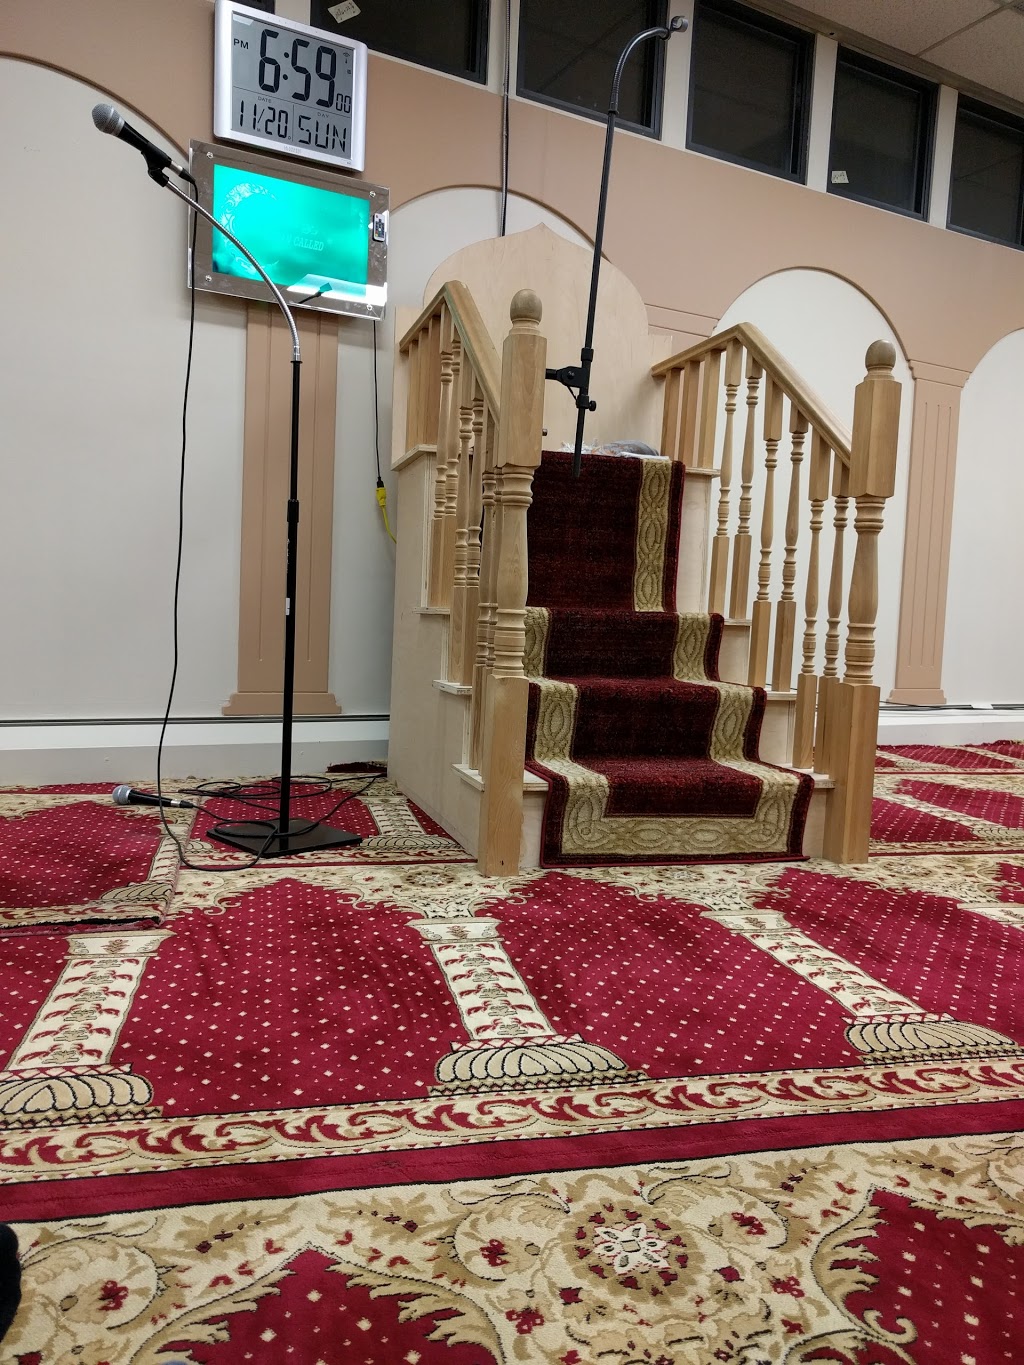 Masjid Al Omari مسجد | 6504 137 Ave NW, Edmonton, AB T5A 1R8, Canada | Phone: (780) 705-4191